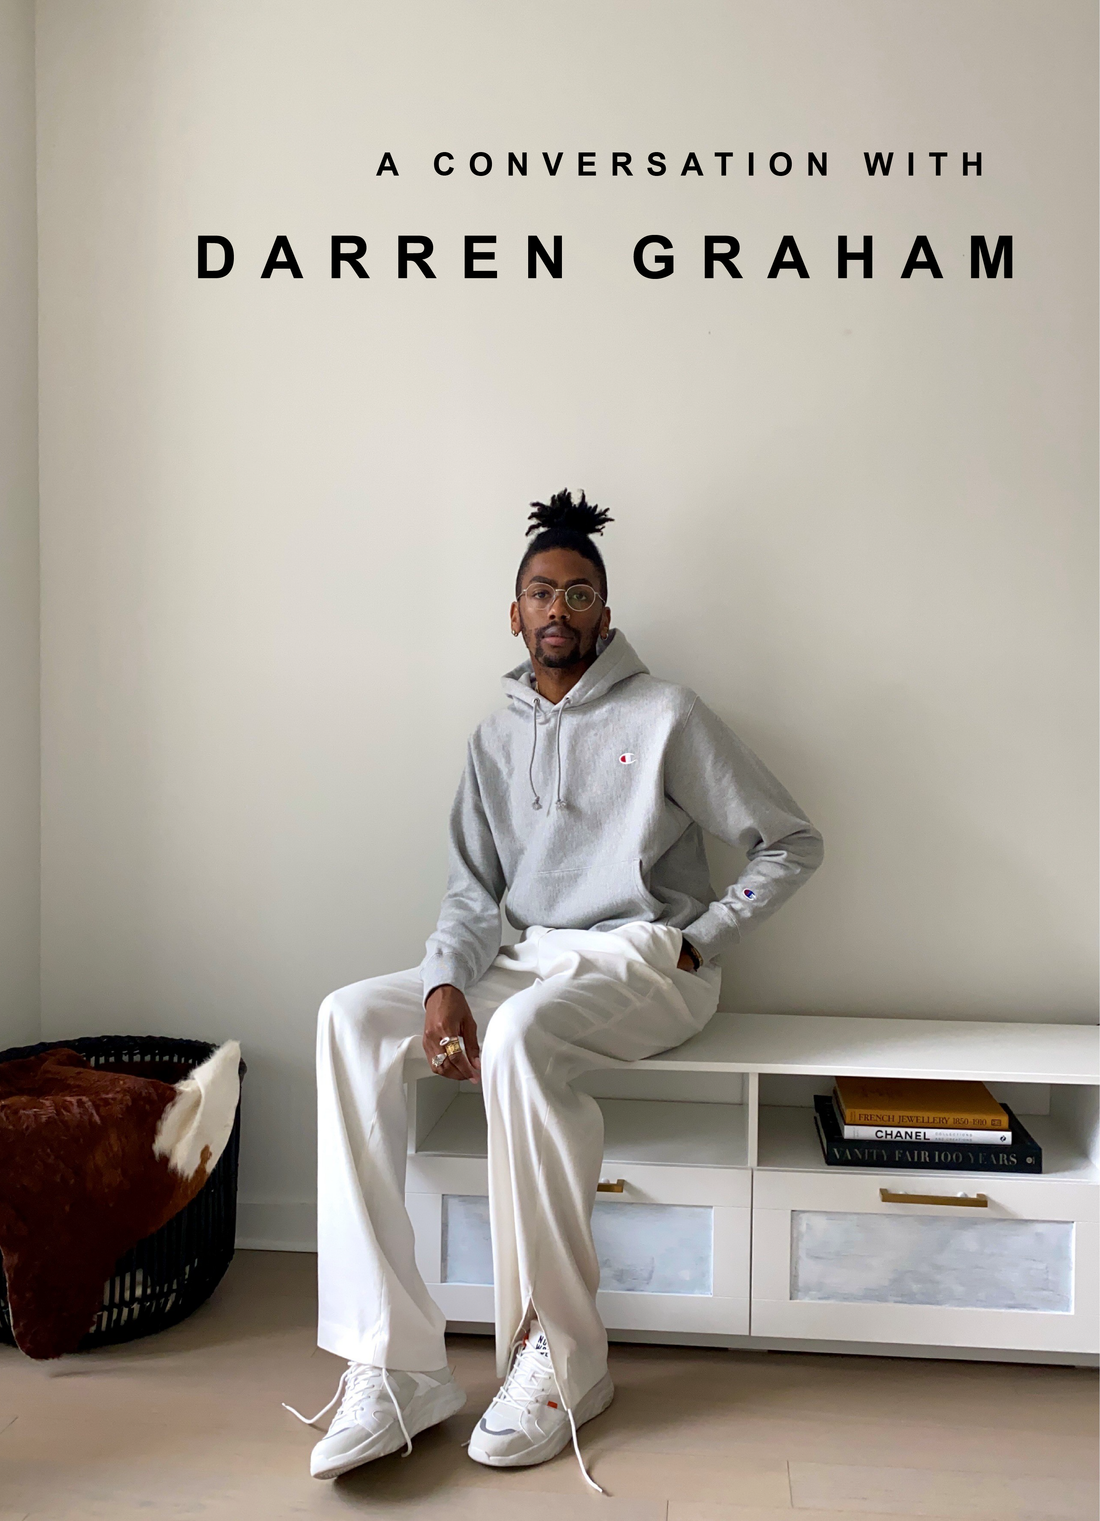 The Conversation with Darren Graham